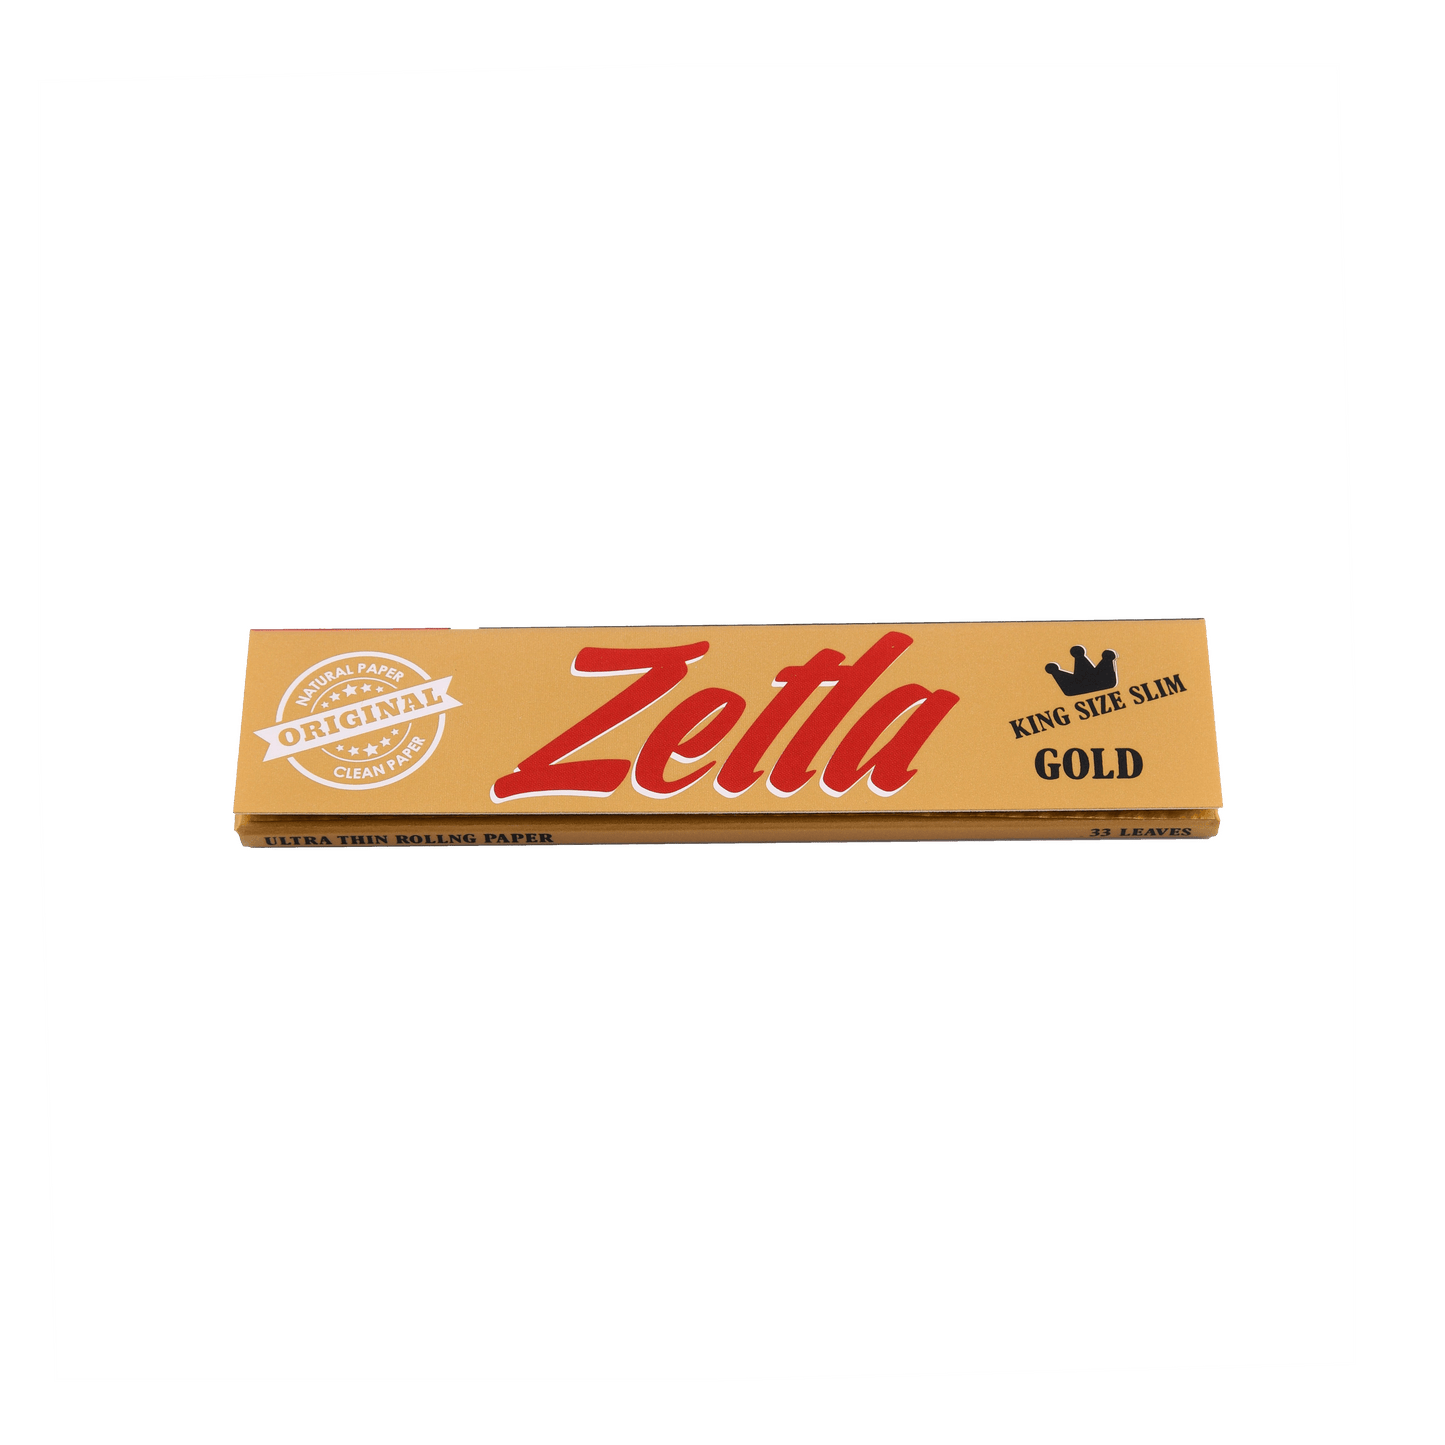 Zetla Rolling Papers Gold King Size Slim+ Filtertips Orange (100 Packs) - Zetla